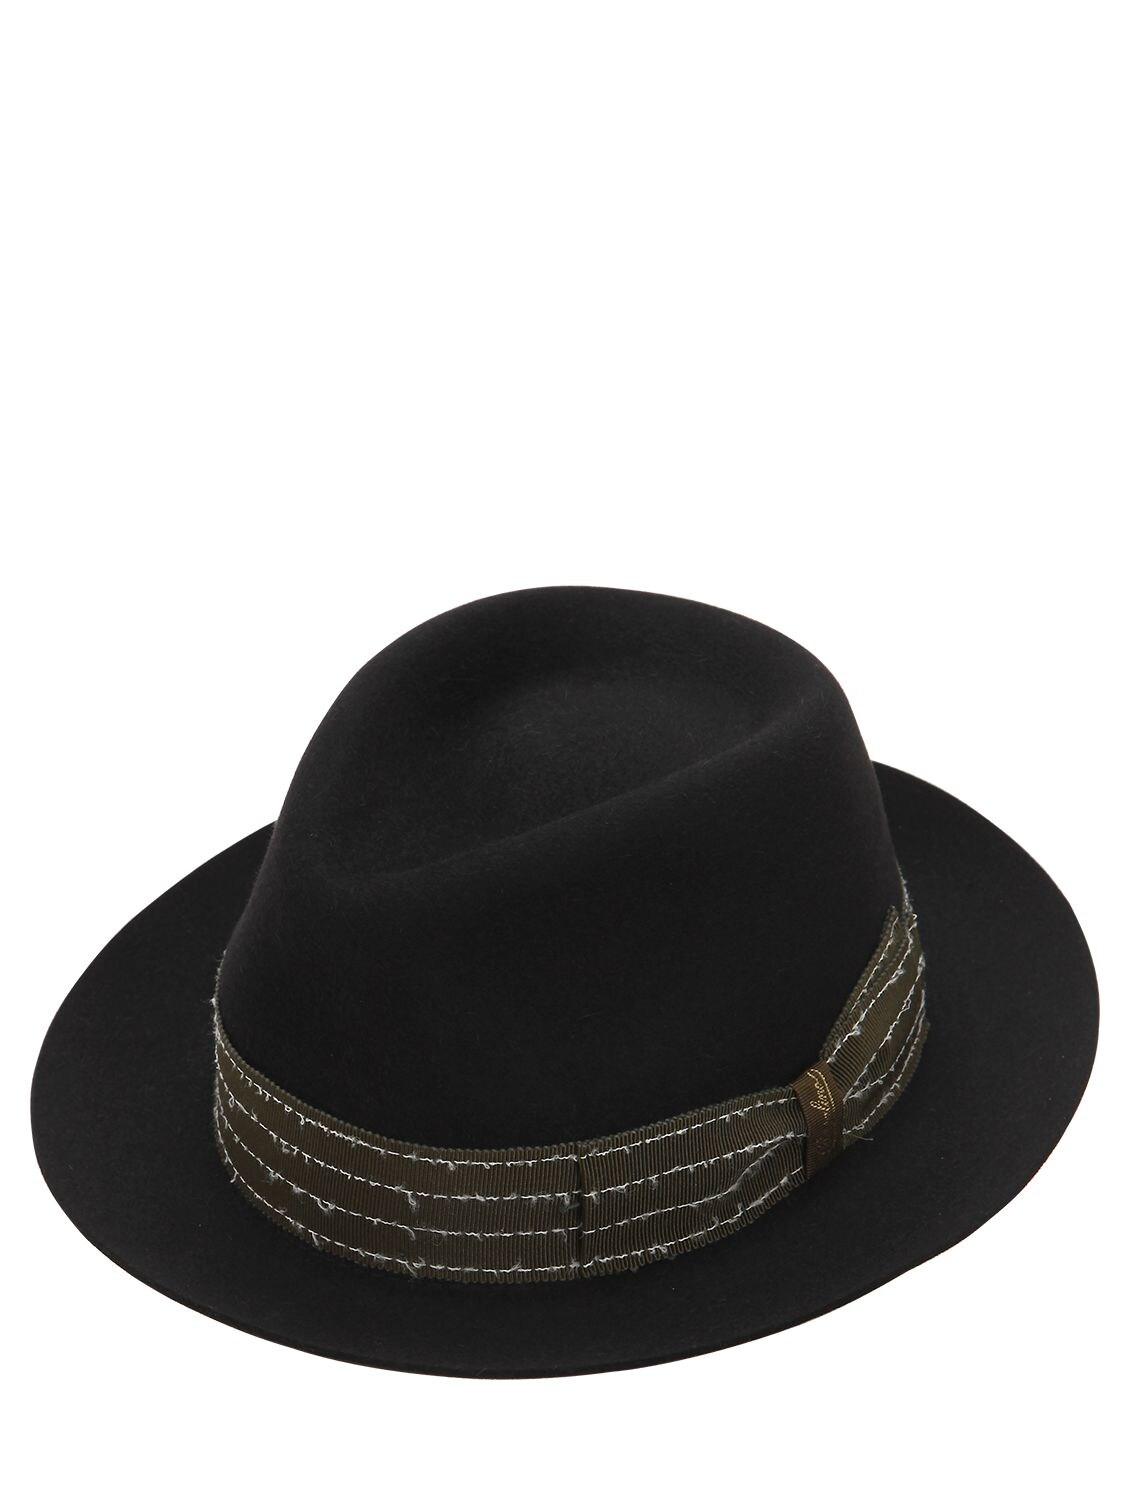 Borsalino Fur Felt Hat W/ Embroidered Hat Band In Black